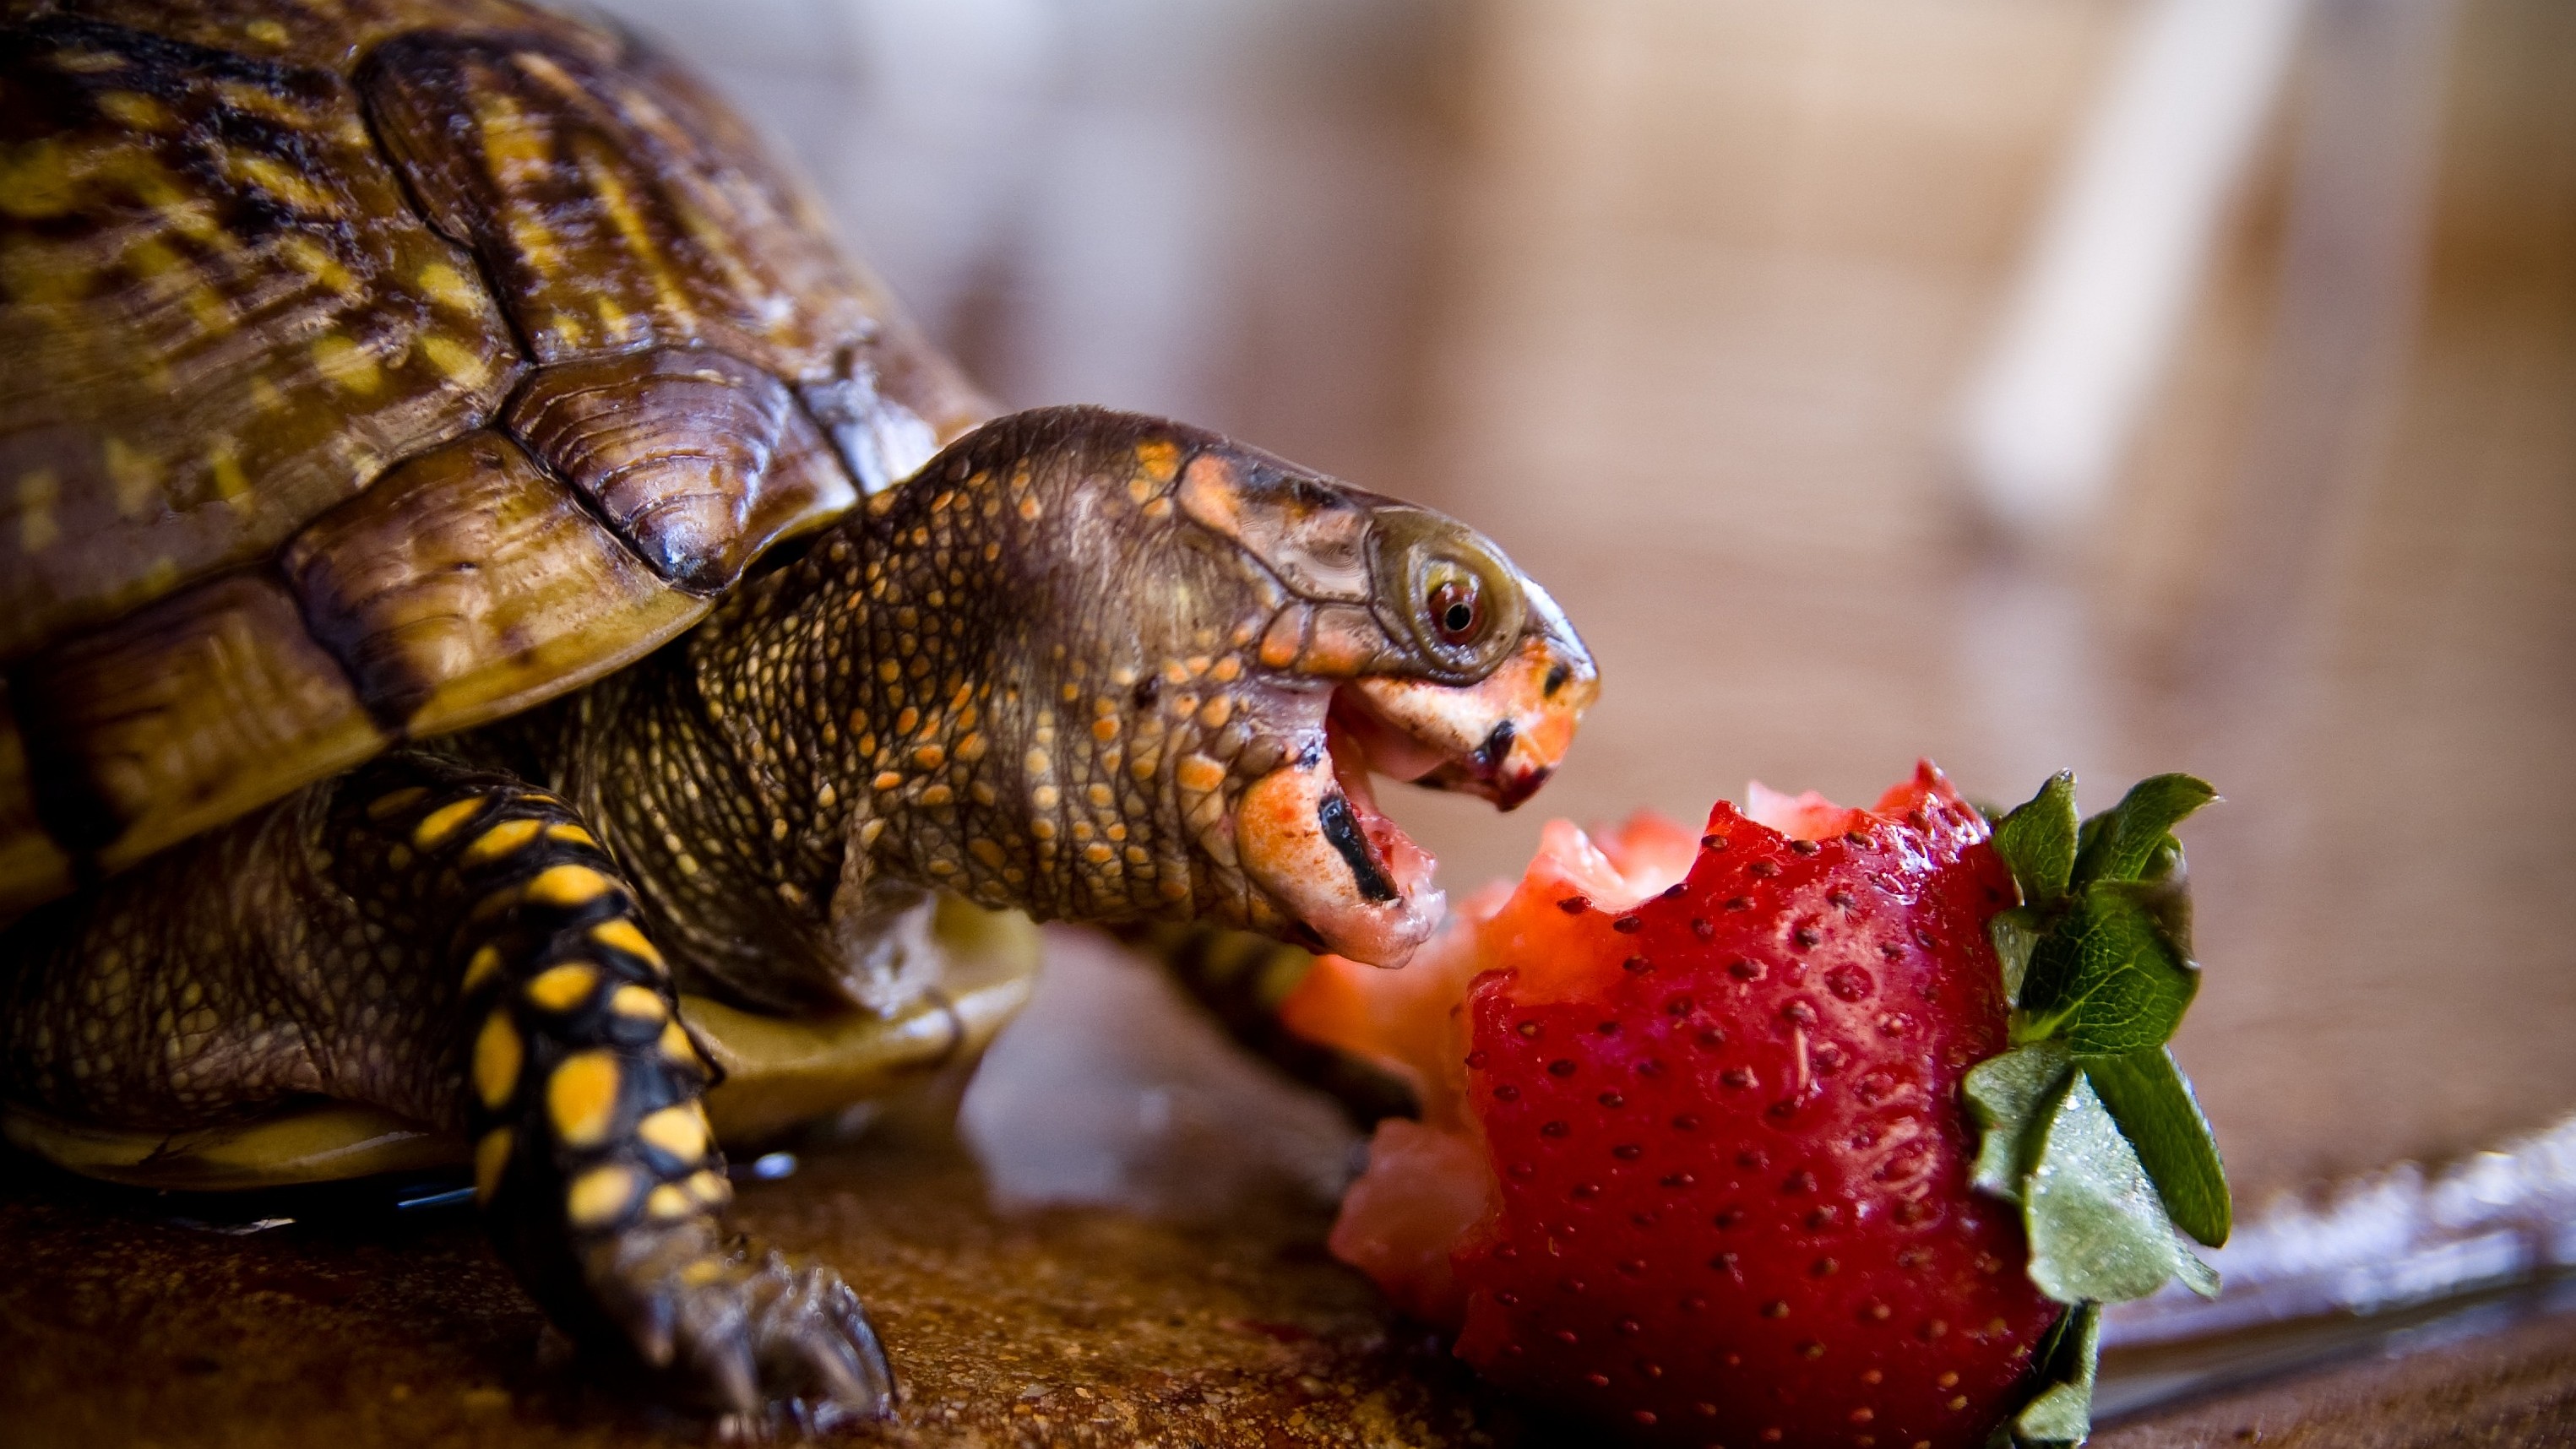 General 3050x1716 strawberries animals fruit tortoises macro humor food